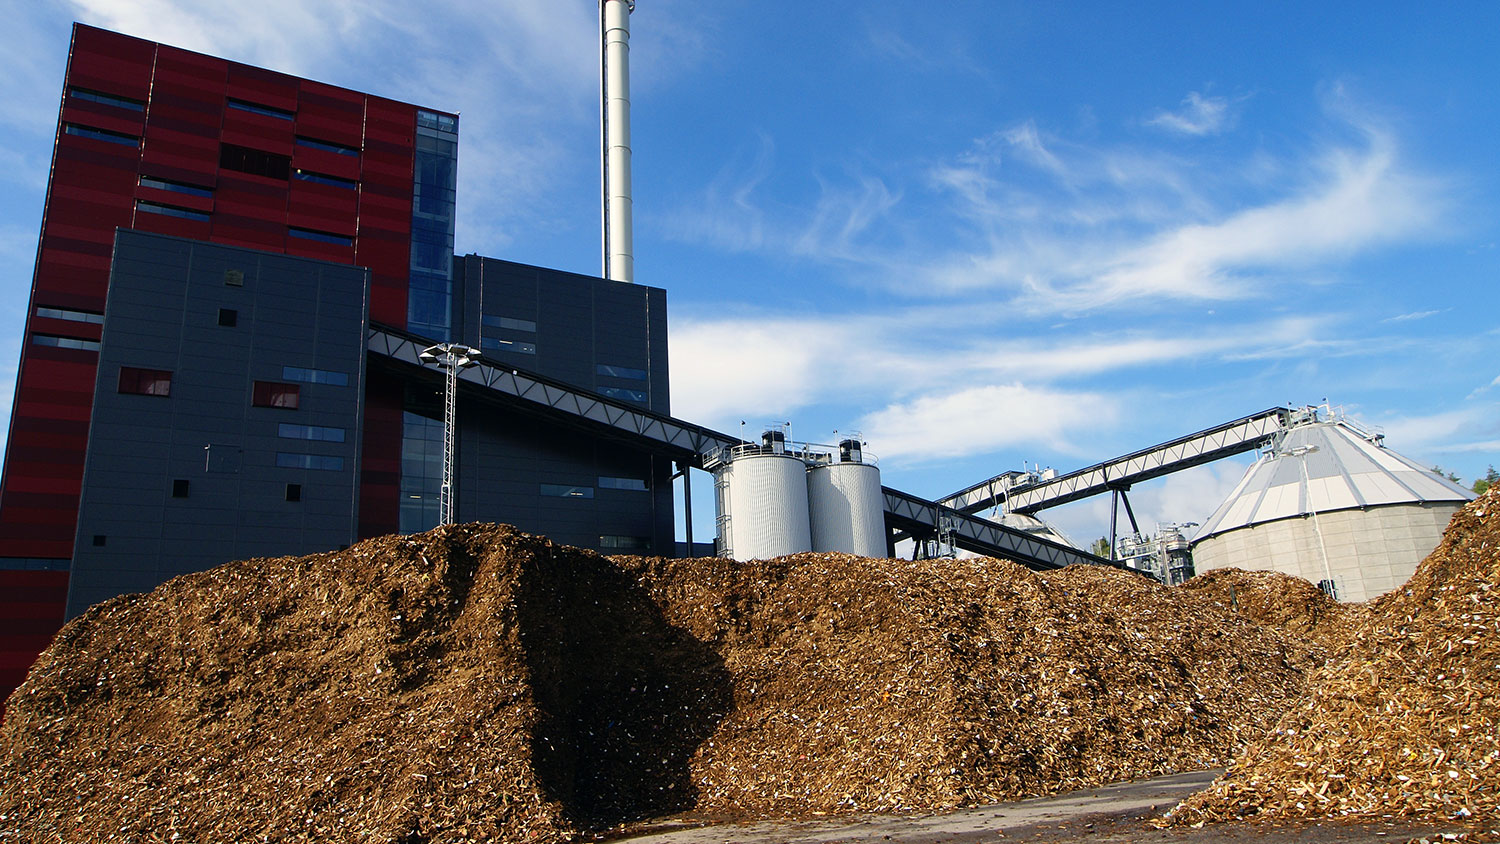 Biomass plant